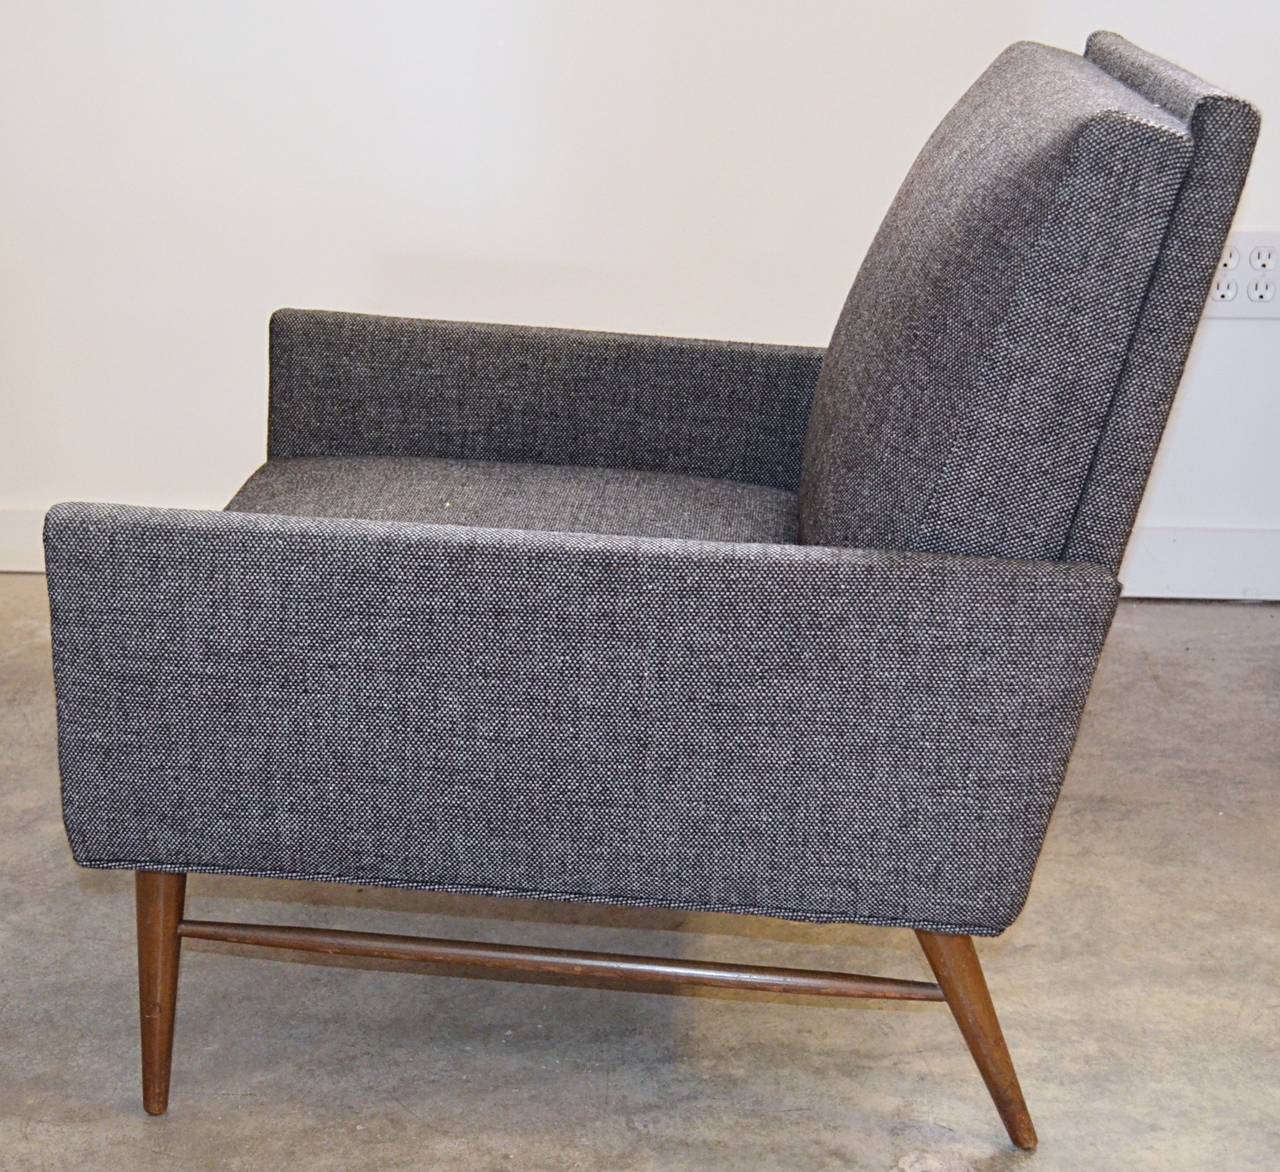 Sleek lined early McCobb club chair in original fabric, charcoal tweed.